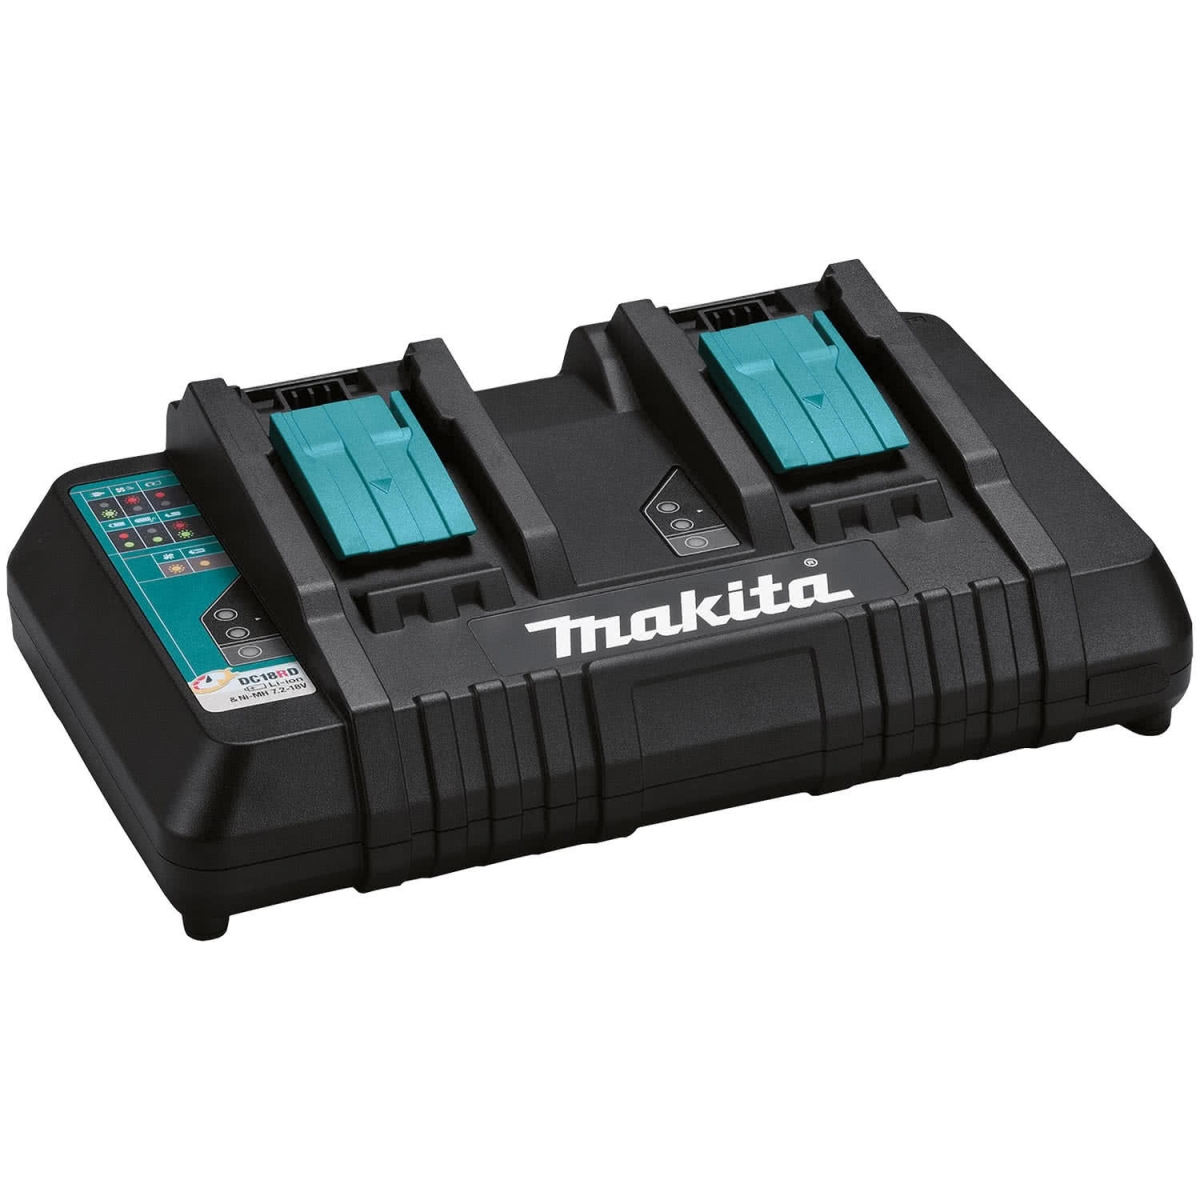 Makita 18V LXT Dual Port Rapid Optimum Charger